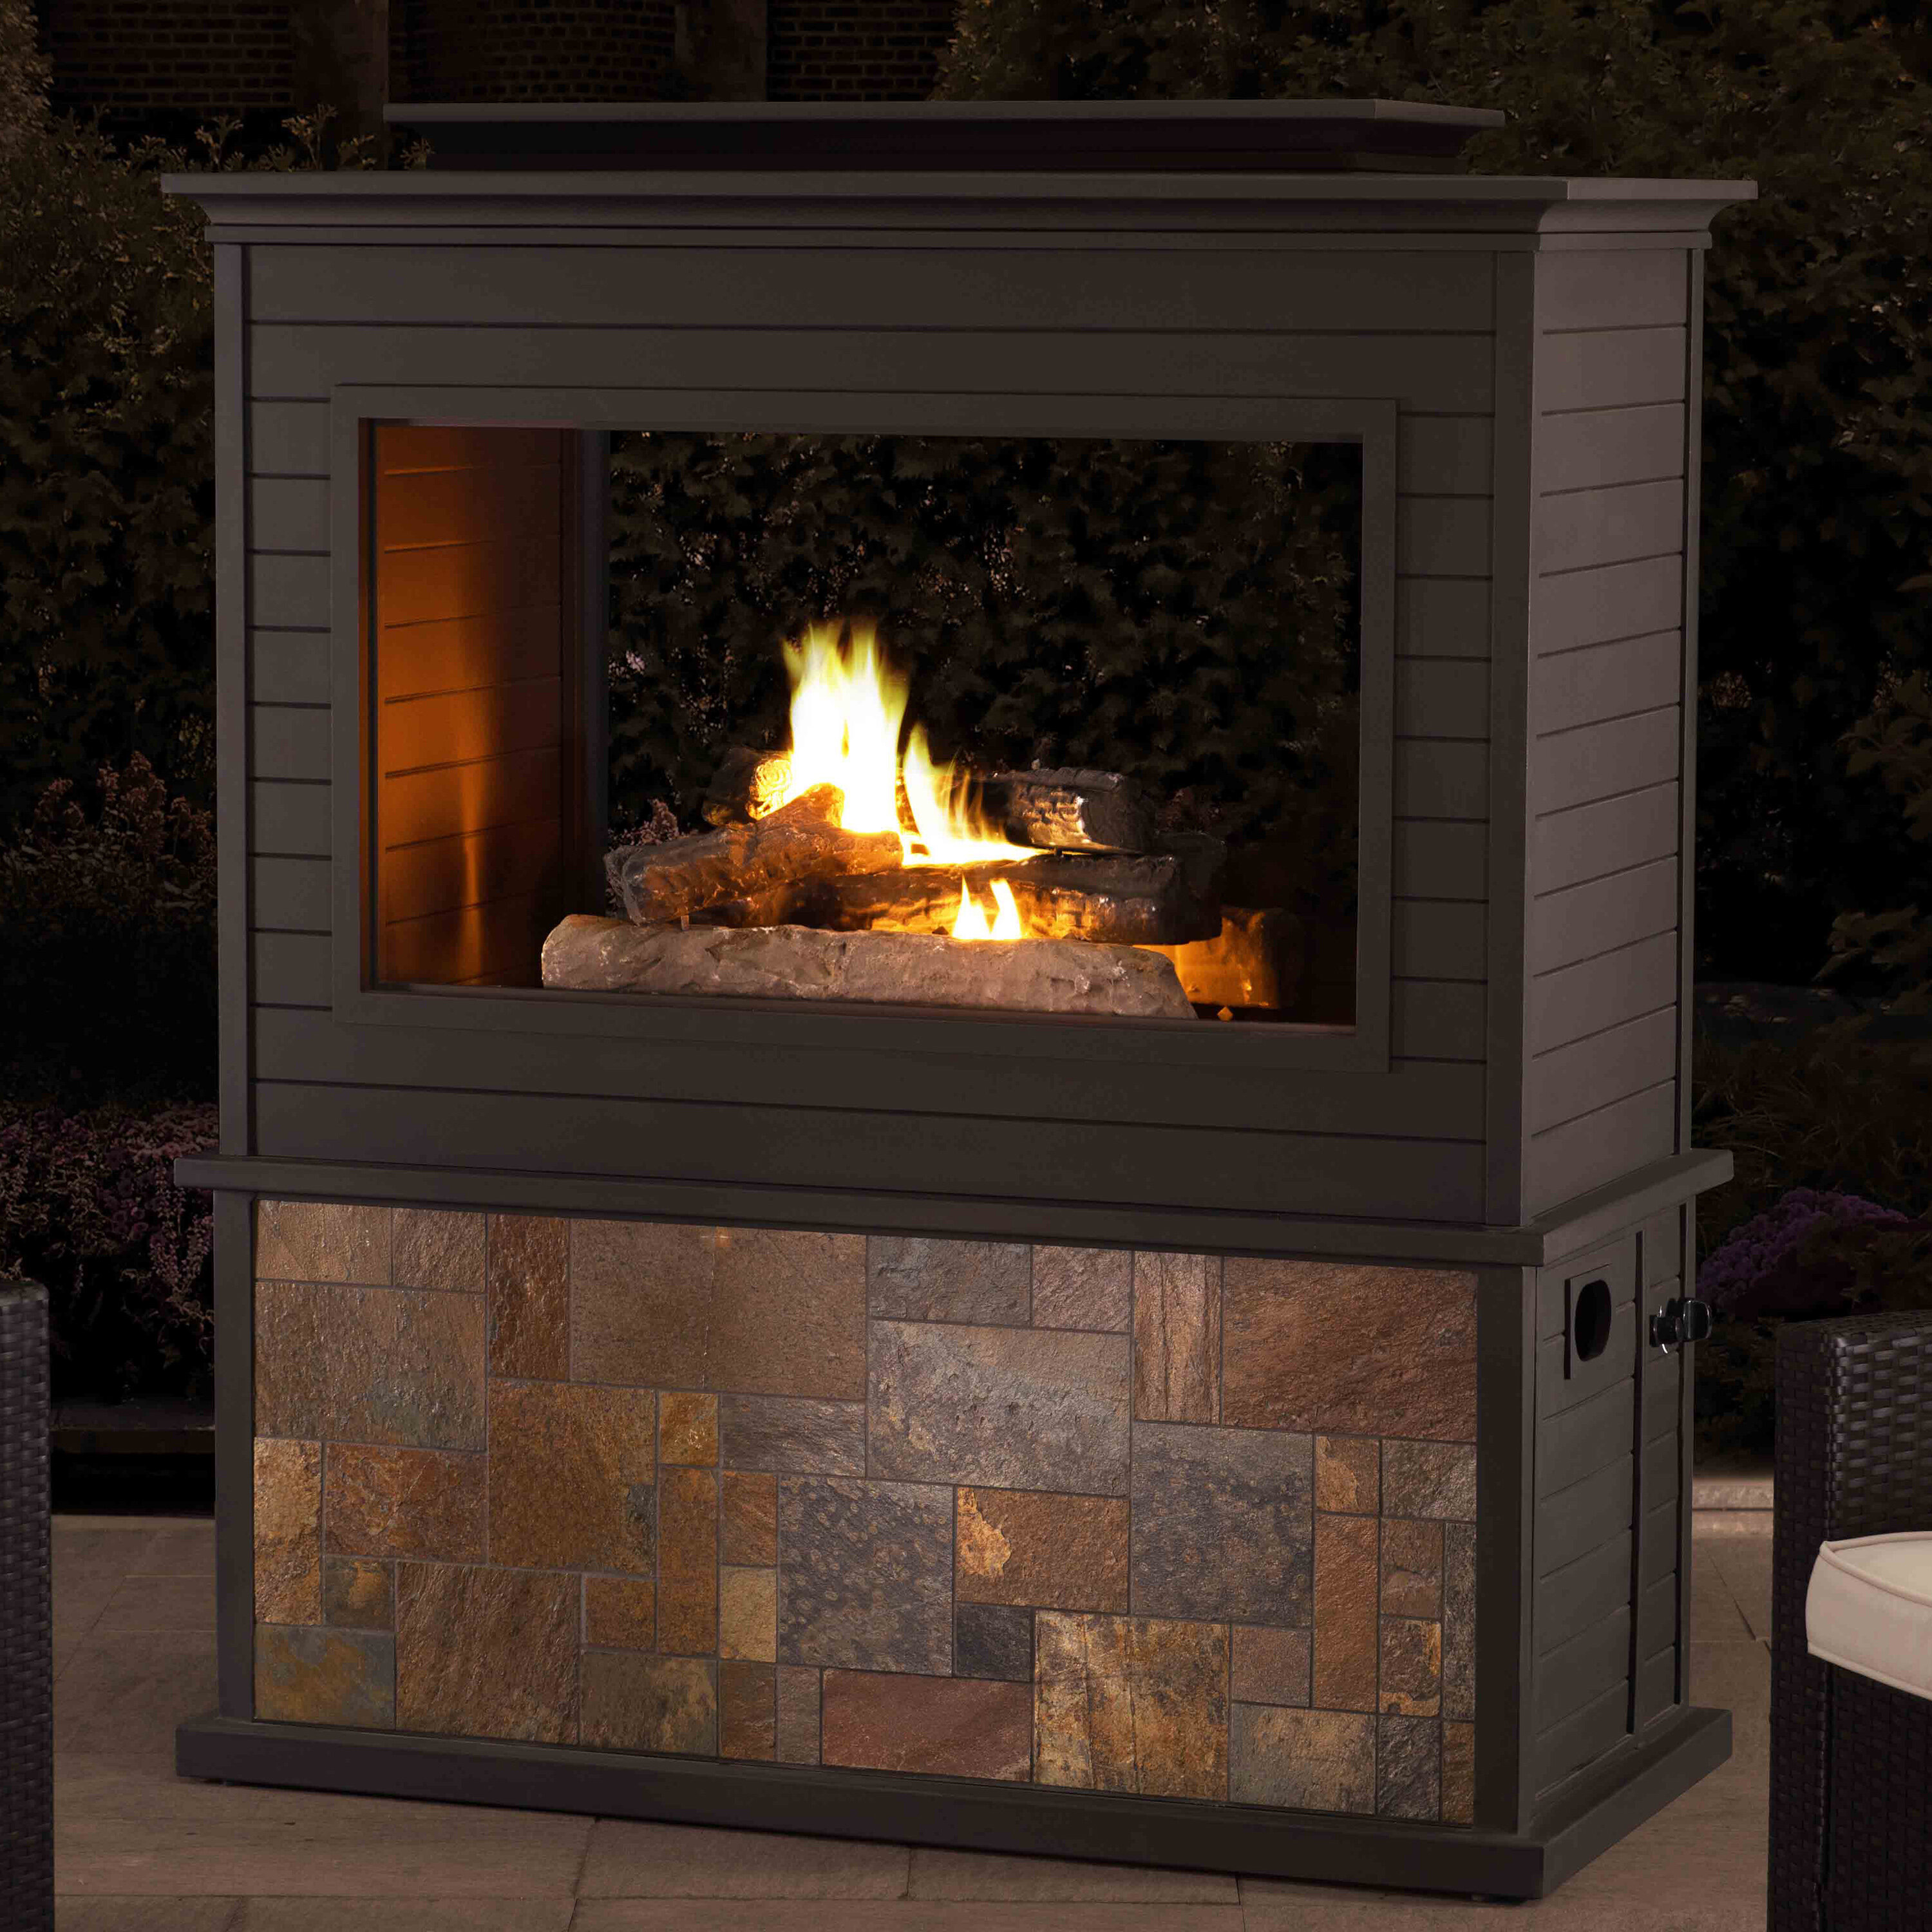 Red Barrel Studio Ortego 24 H Propane Outdoor Fireplace Reviews Wayfair